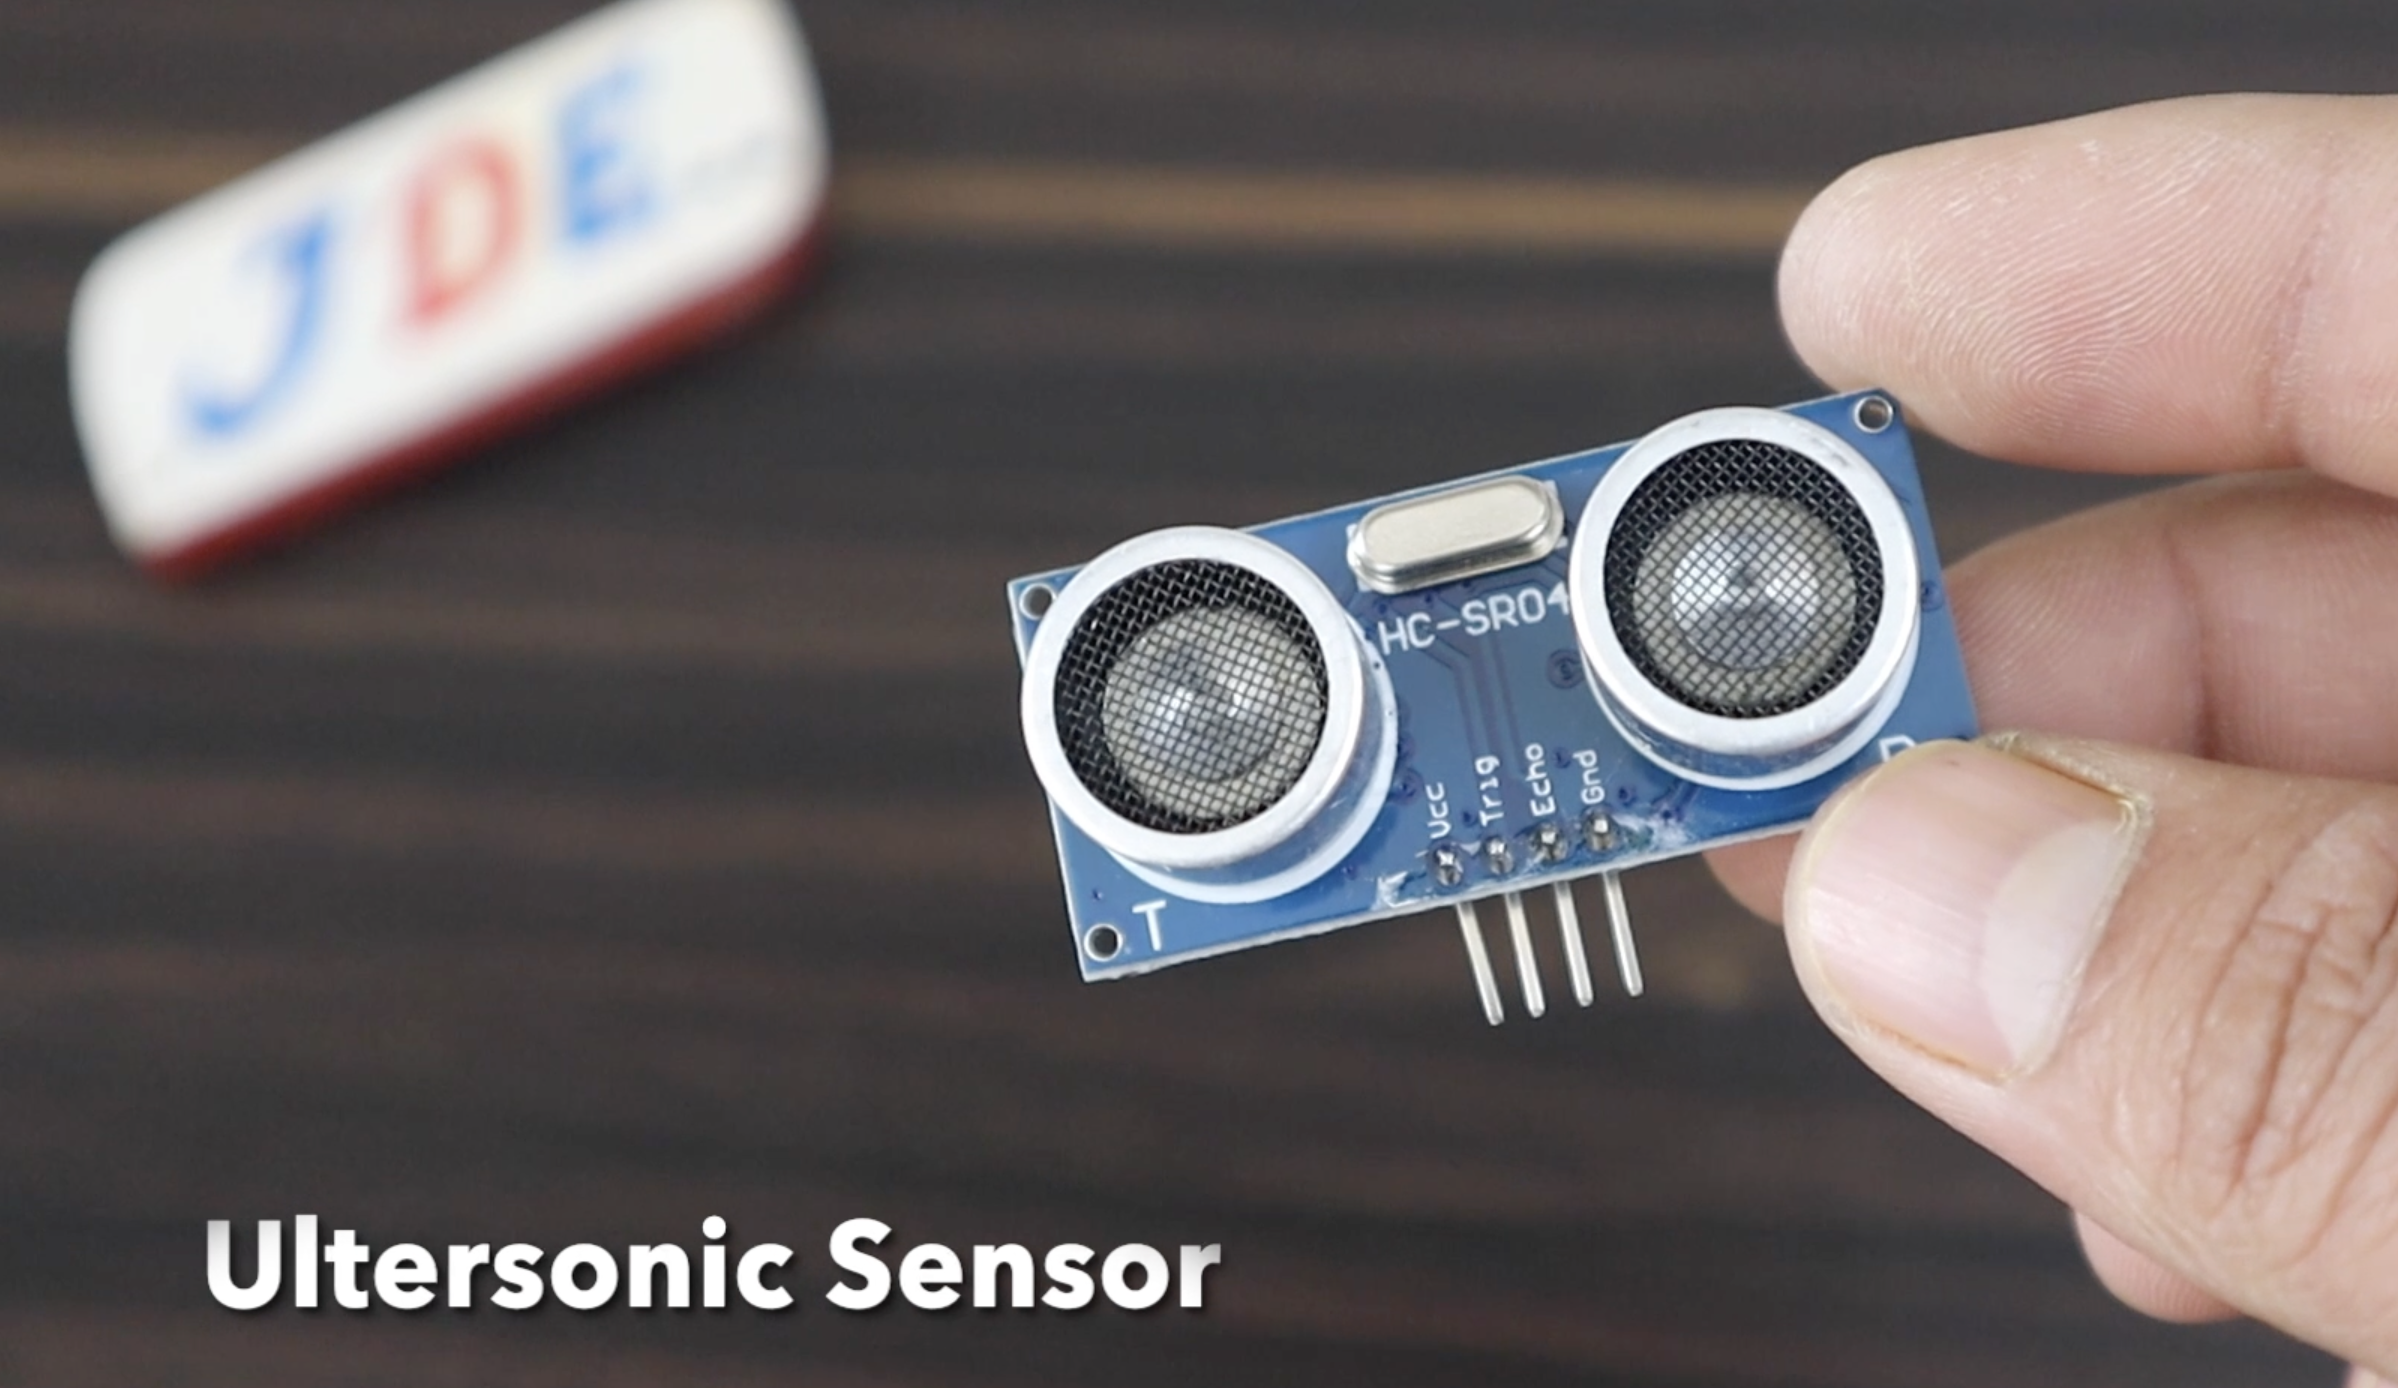 Esp32 cam Motion Detection using Ultrasonic Sensor2